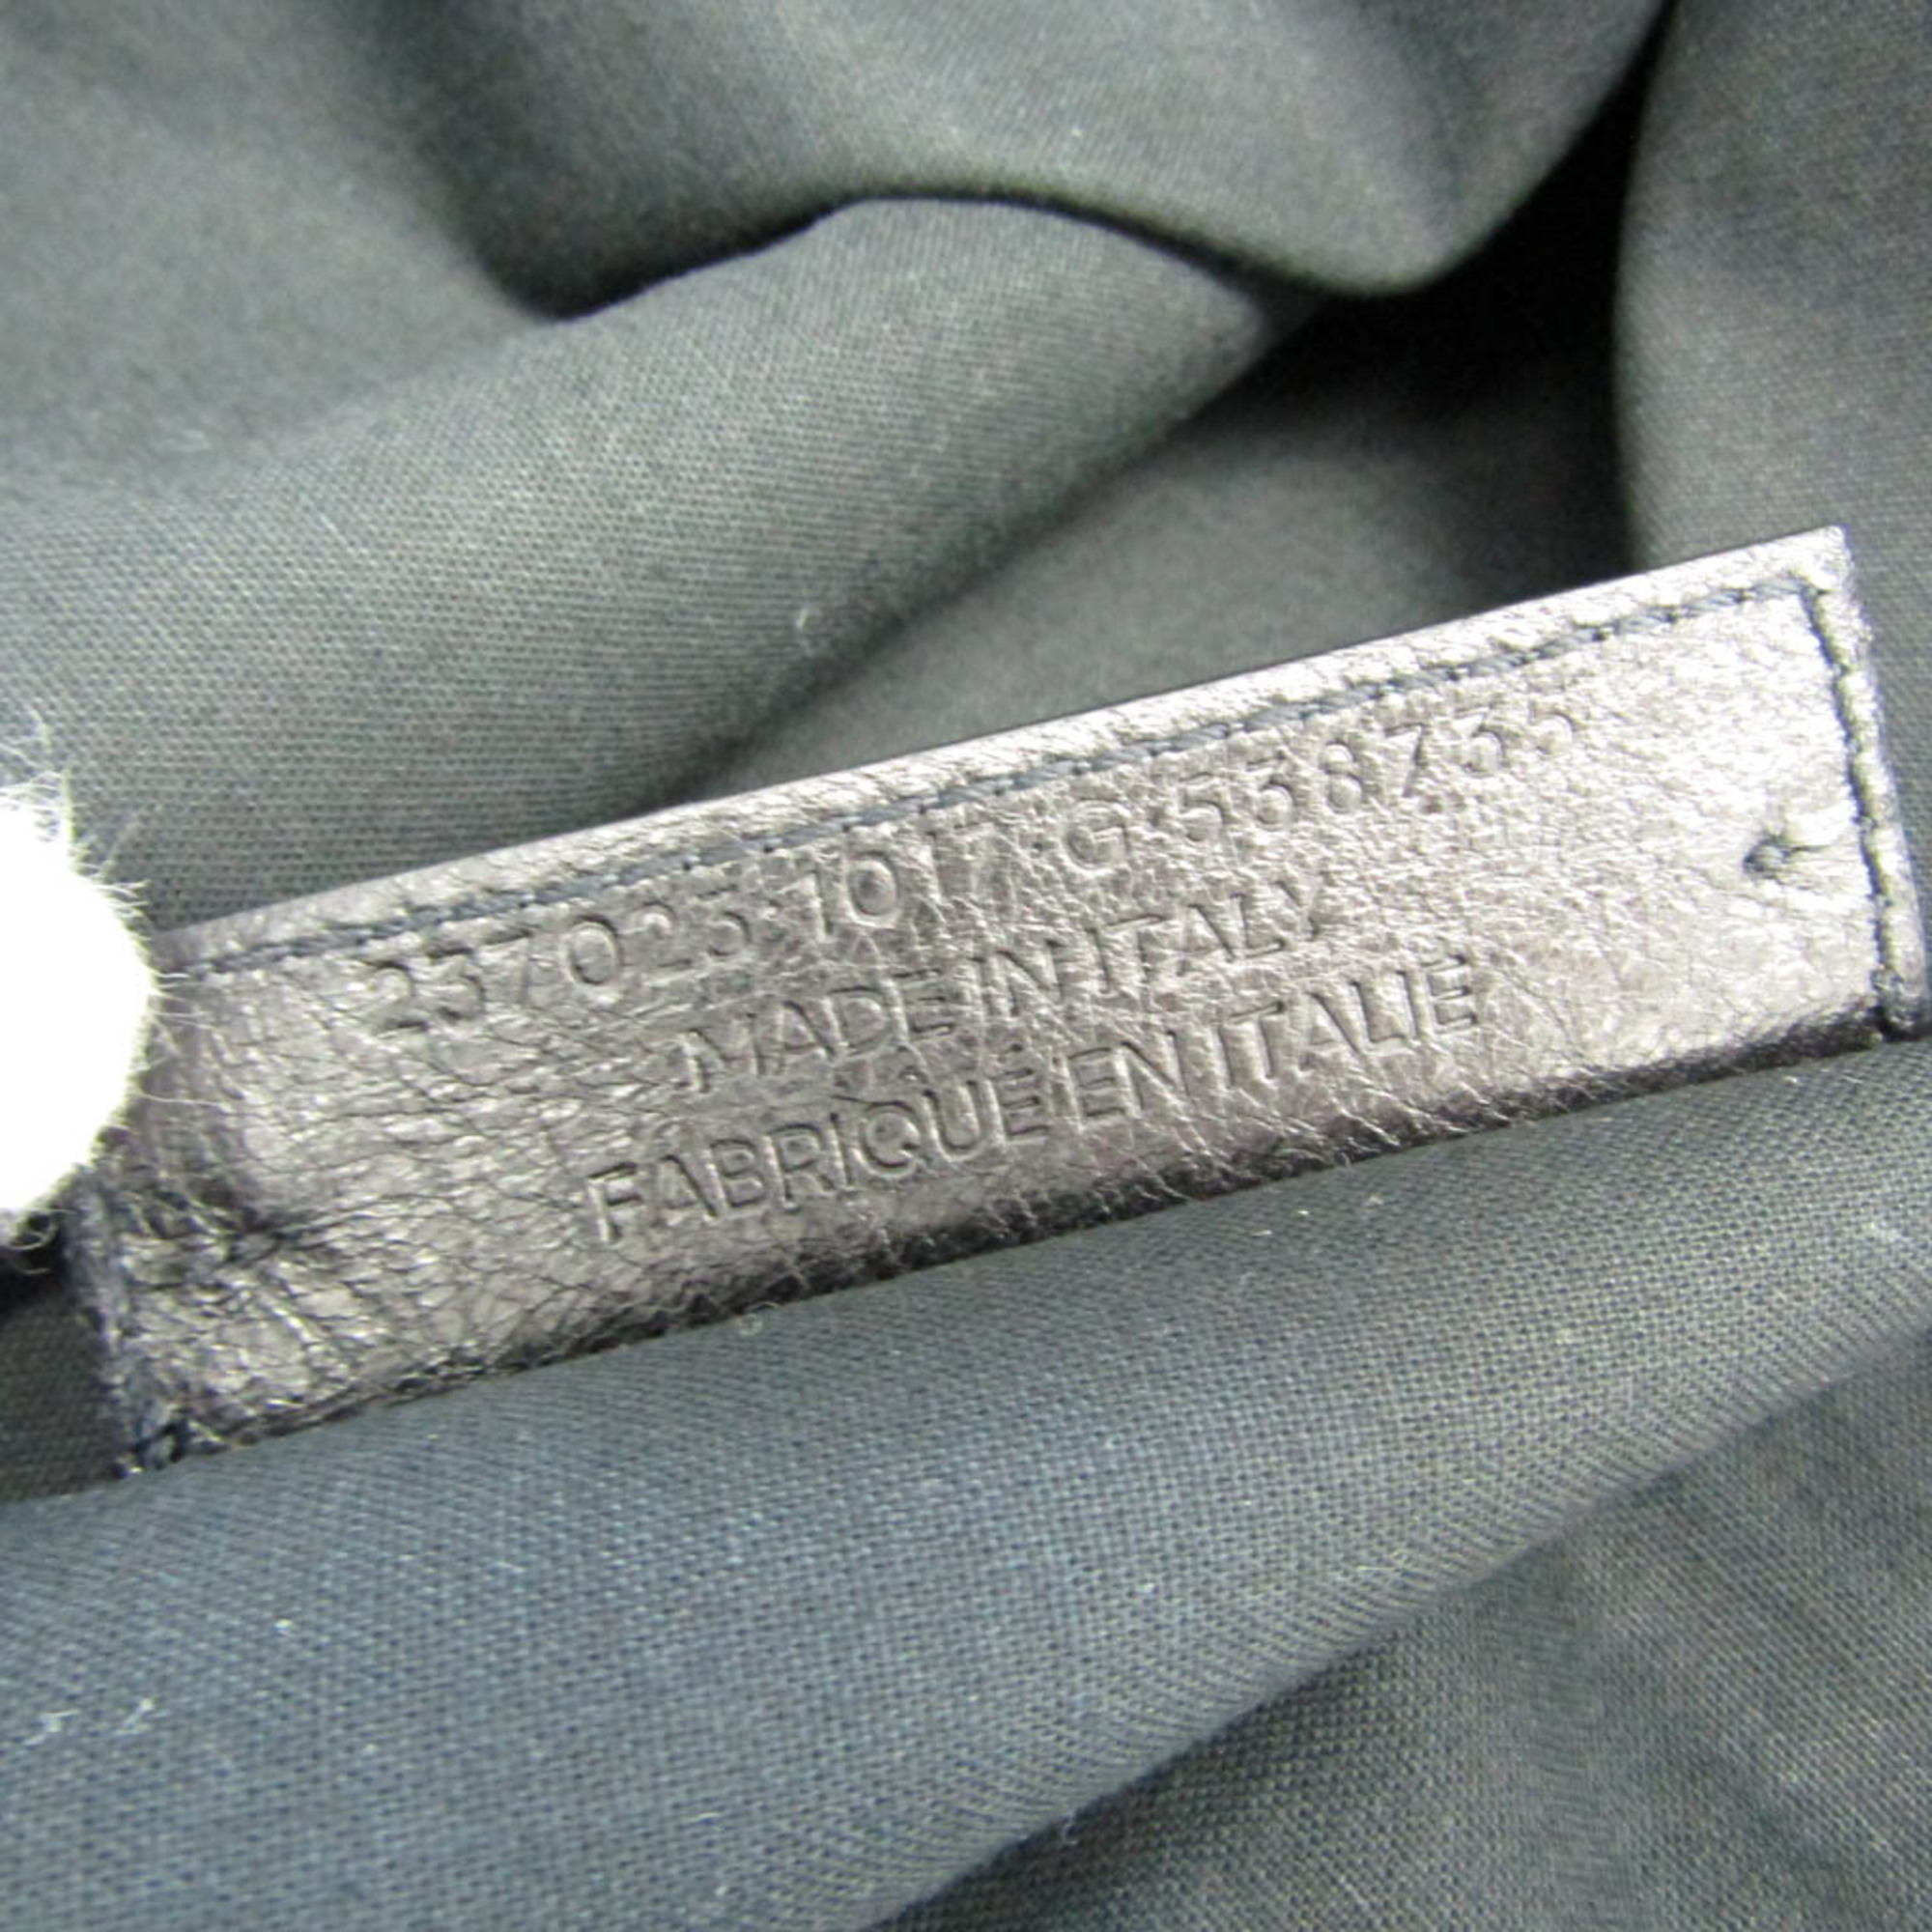 Balenciaga Classic Clip 237023 Women's Leather Clutch Bag Black,Gray Beige